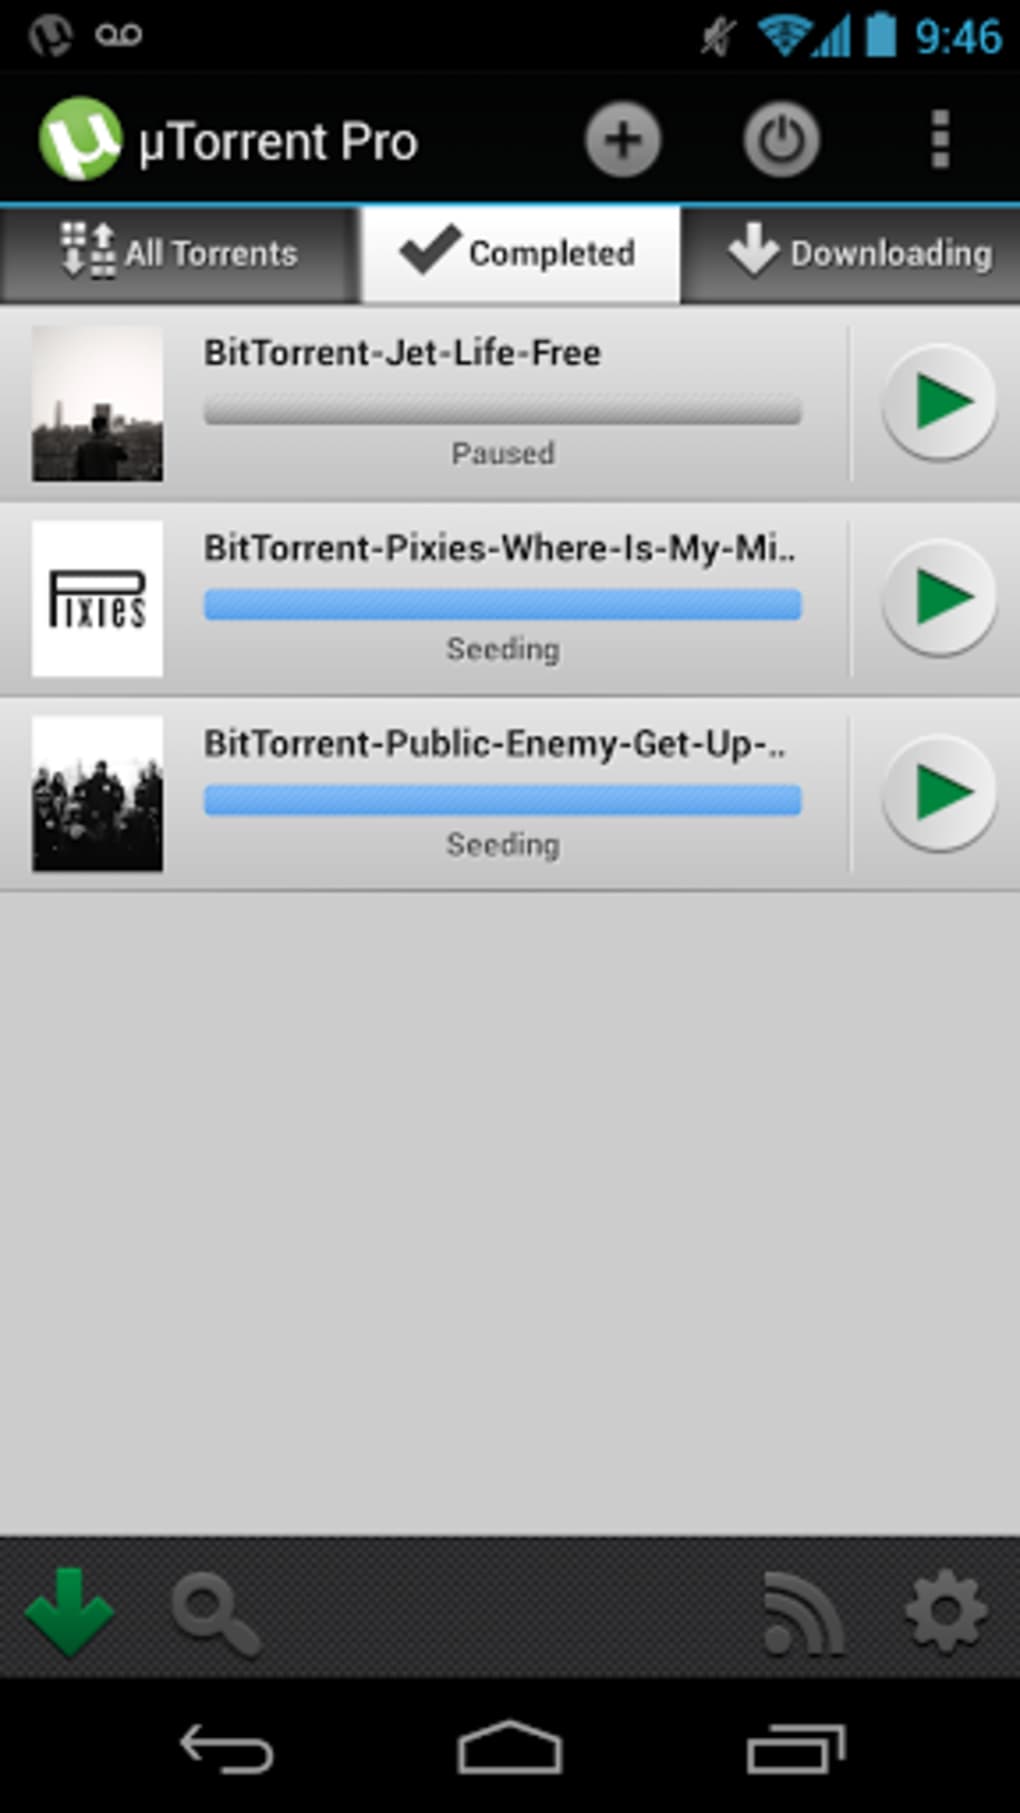 utorrent app pro